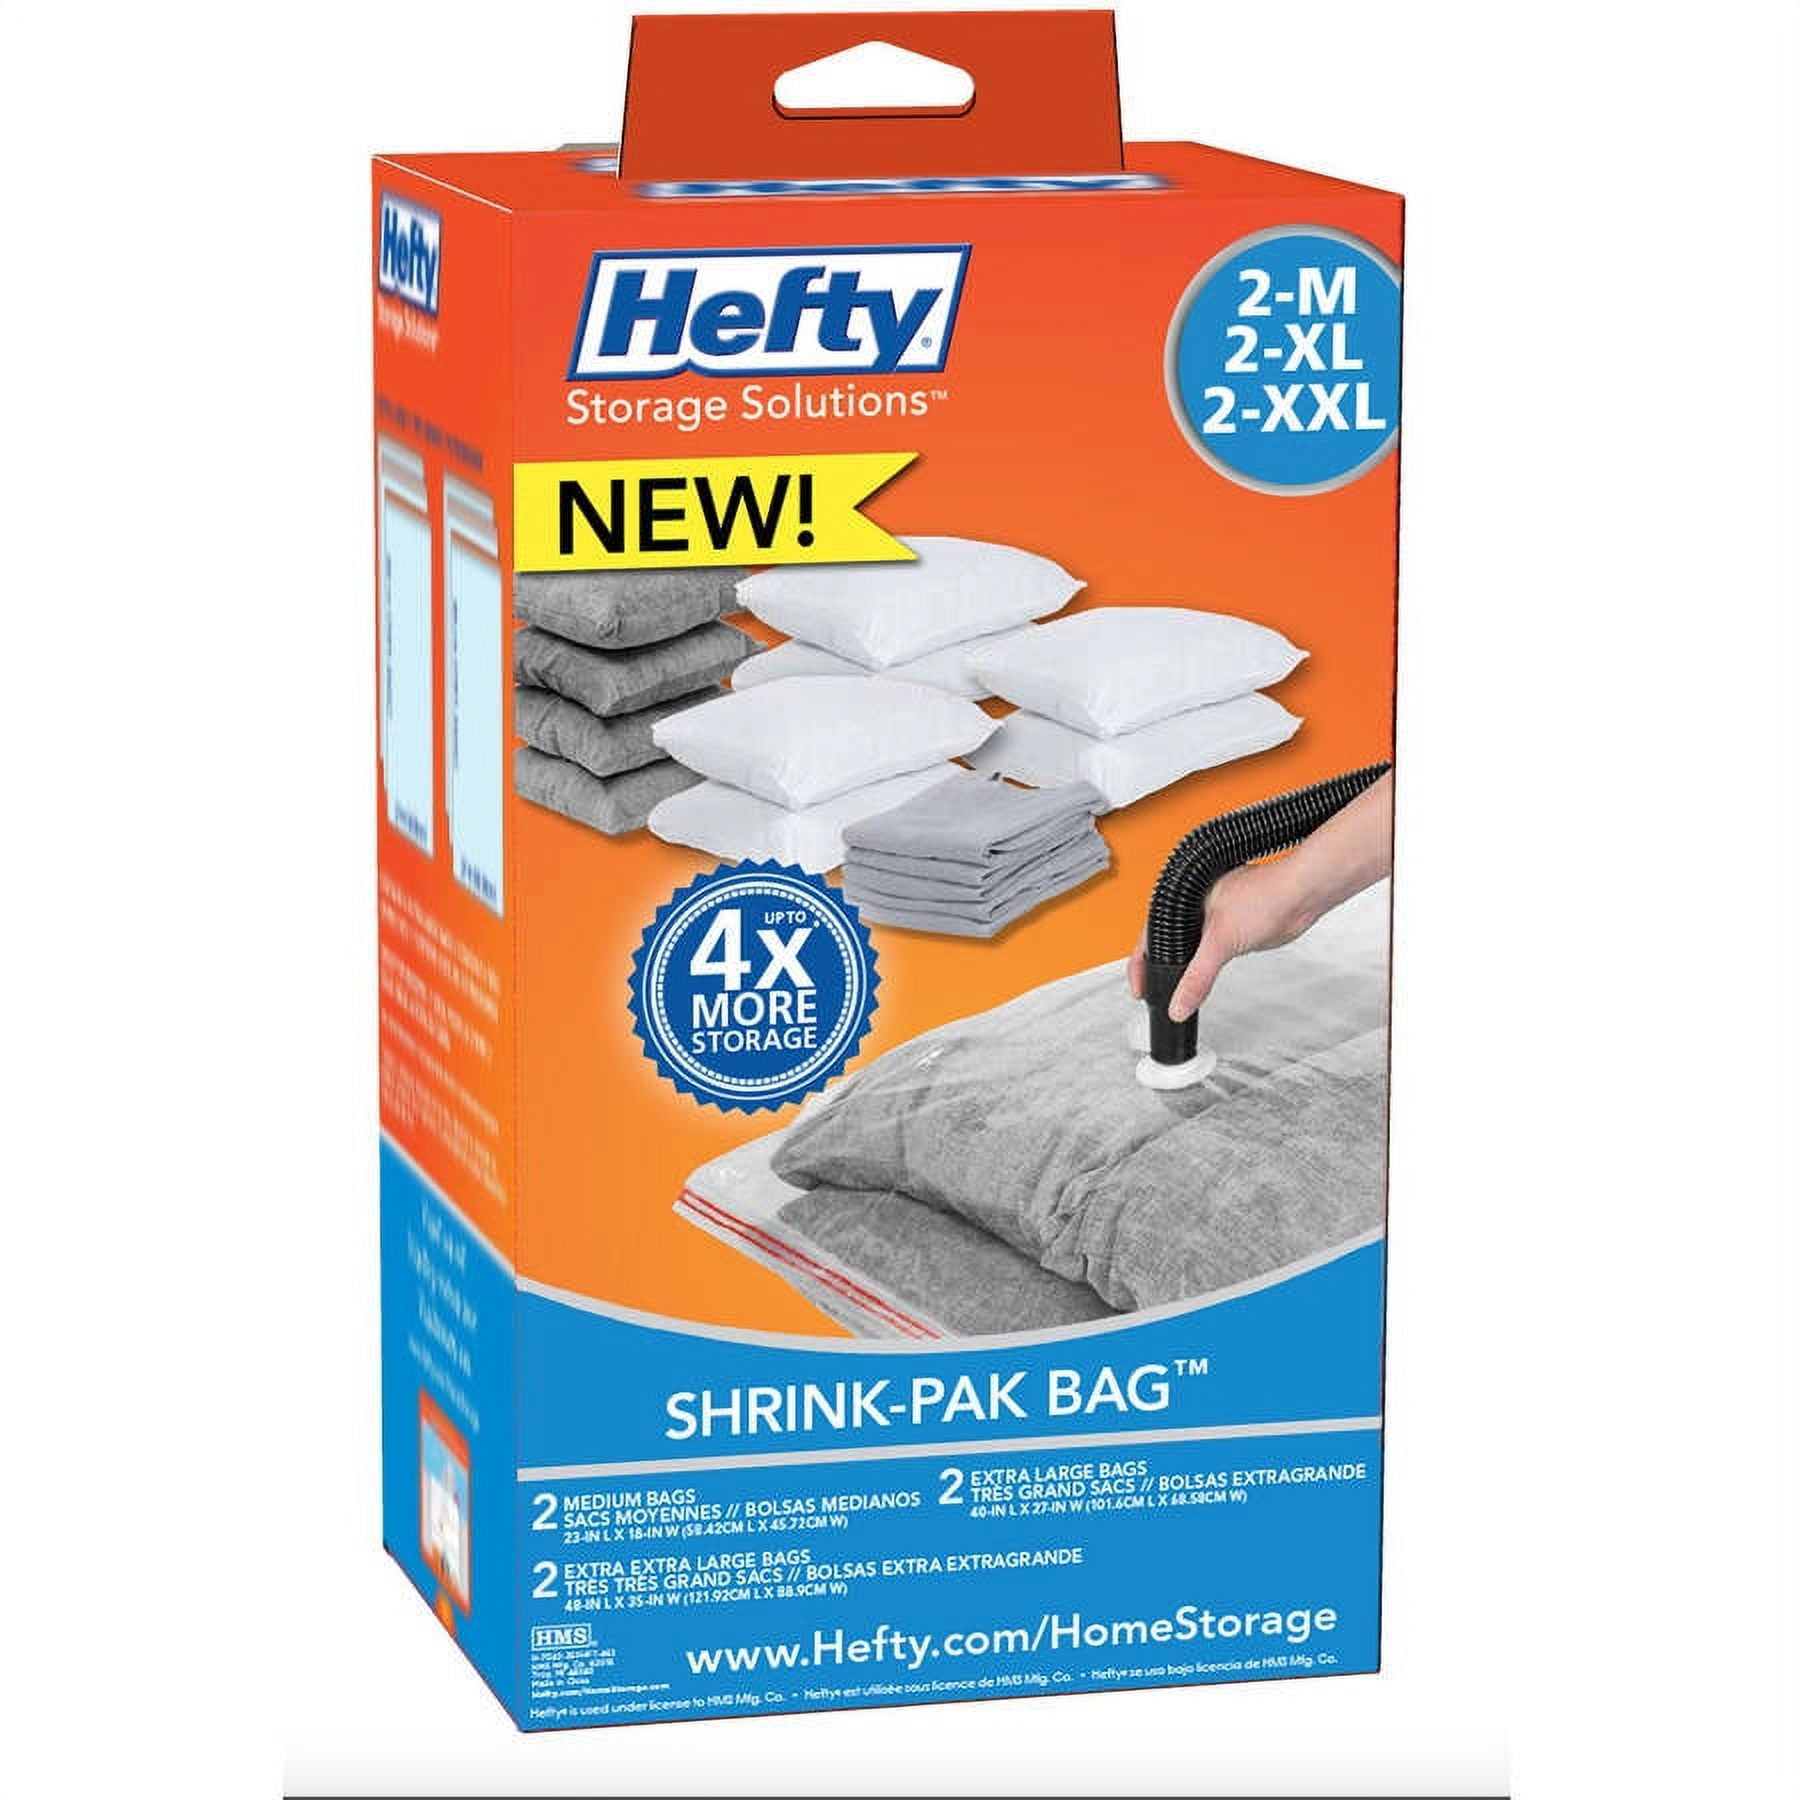 Hefty Shrink-Pak - 3 Large, 3 XL Vacuum Storage Bags for Storage